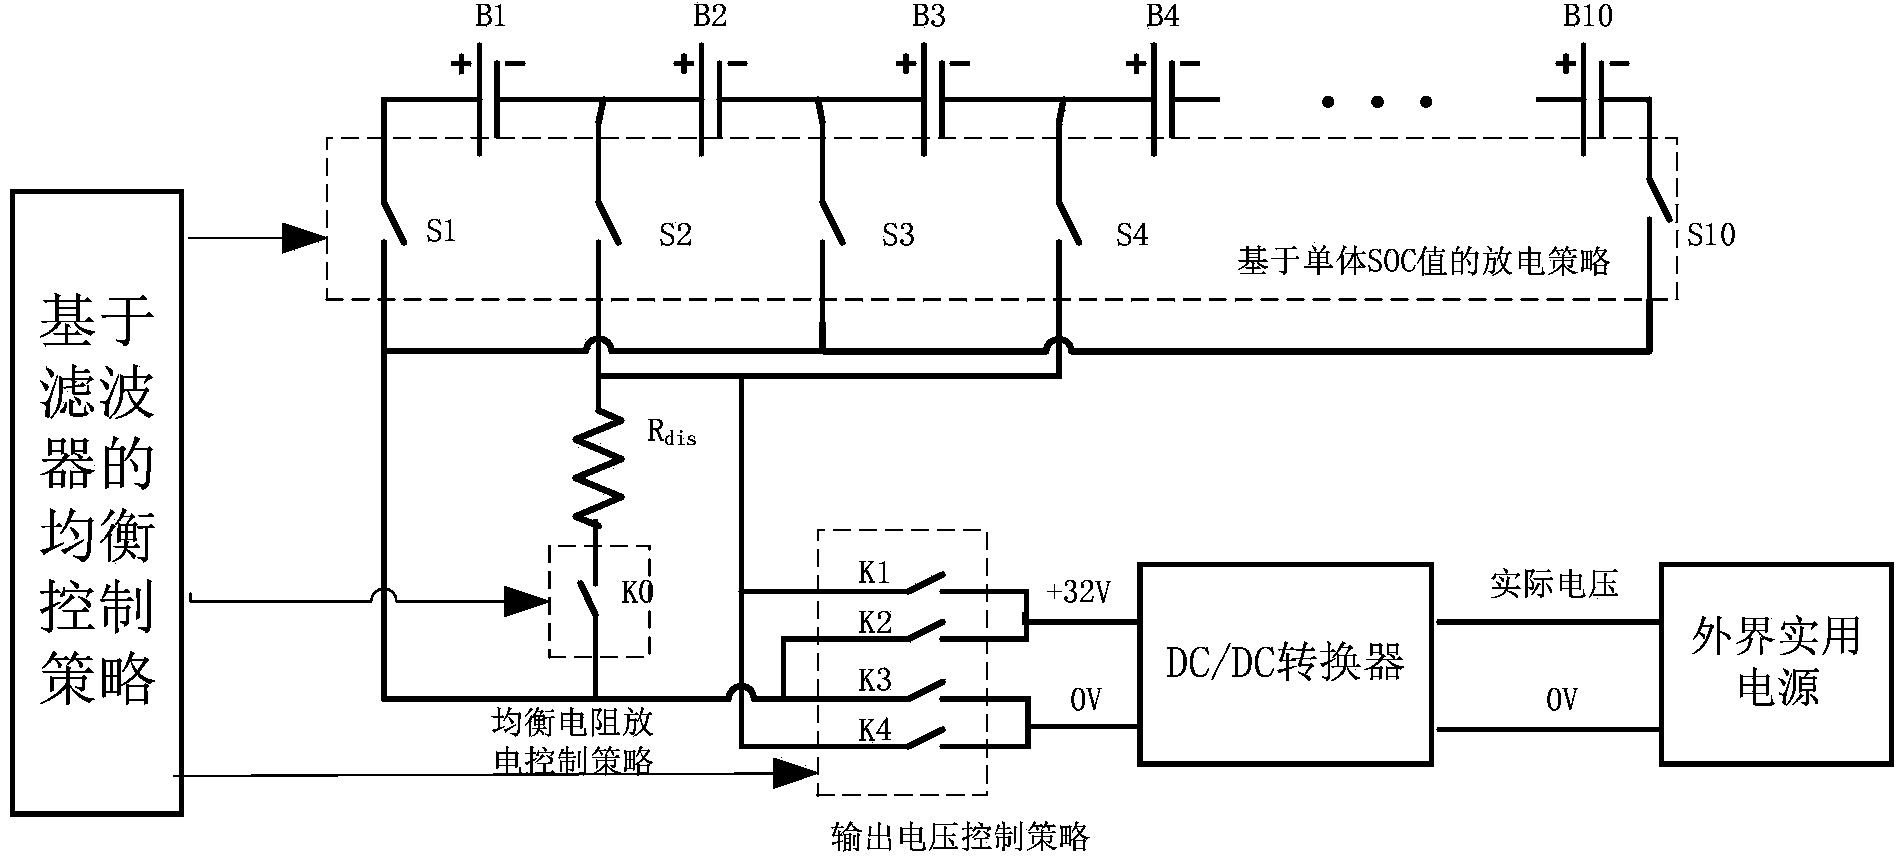 Balance control method of lithium-ion battery set